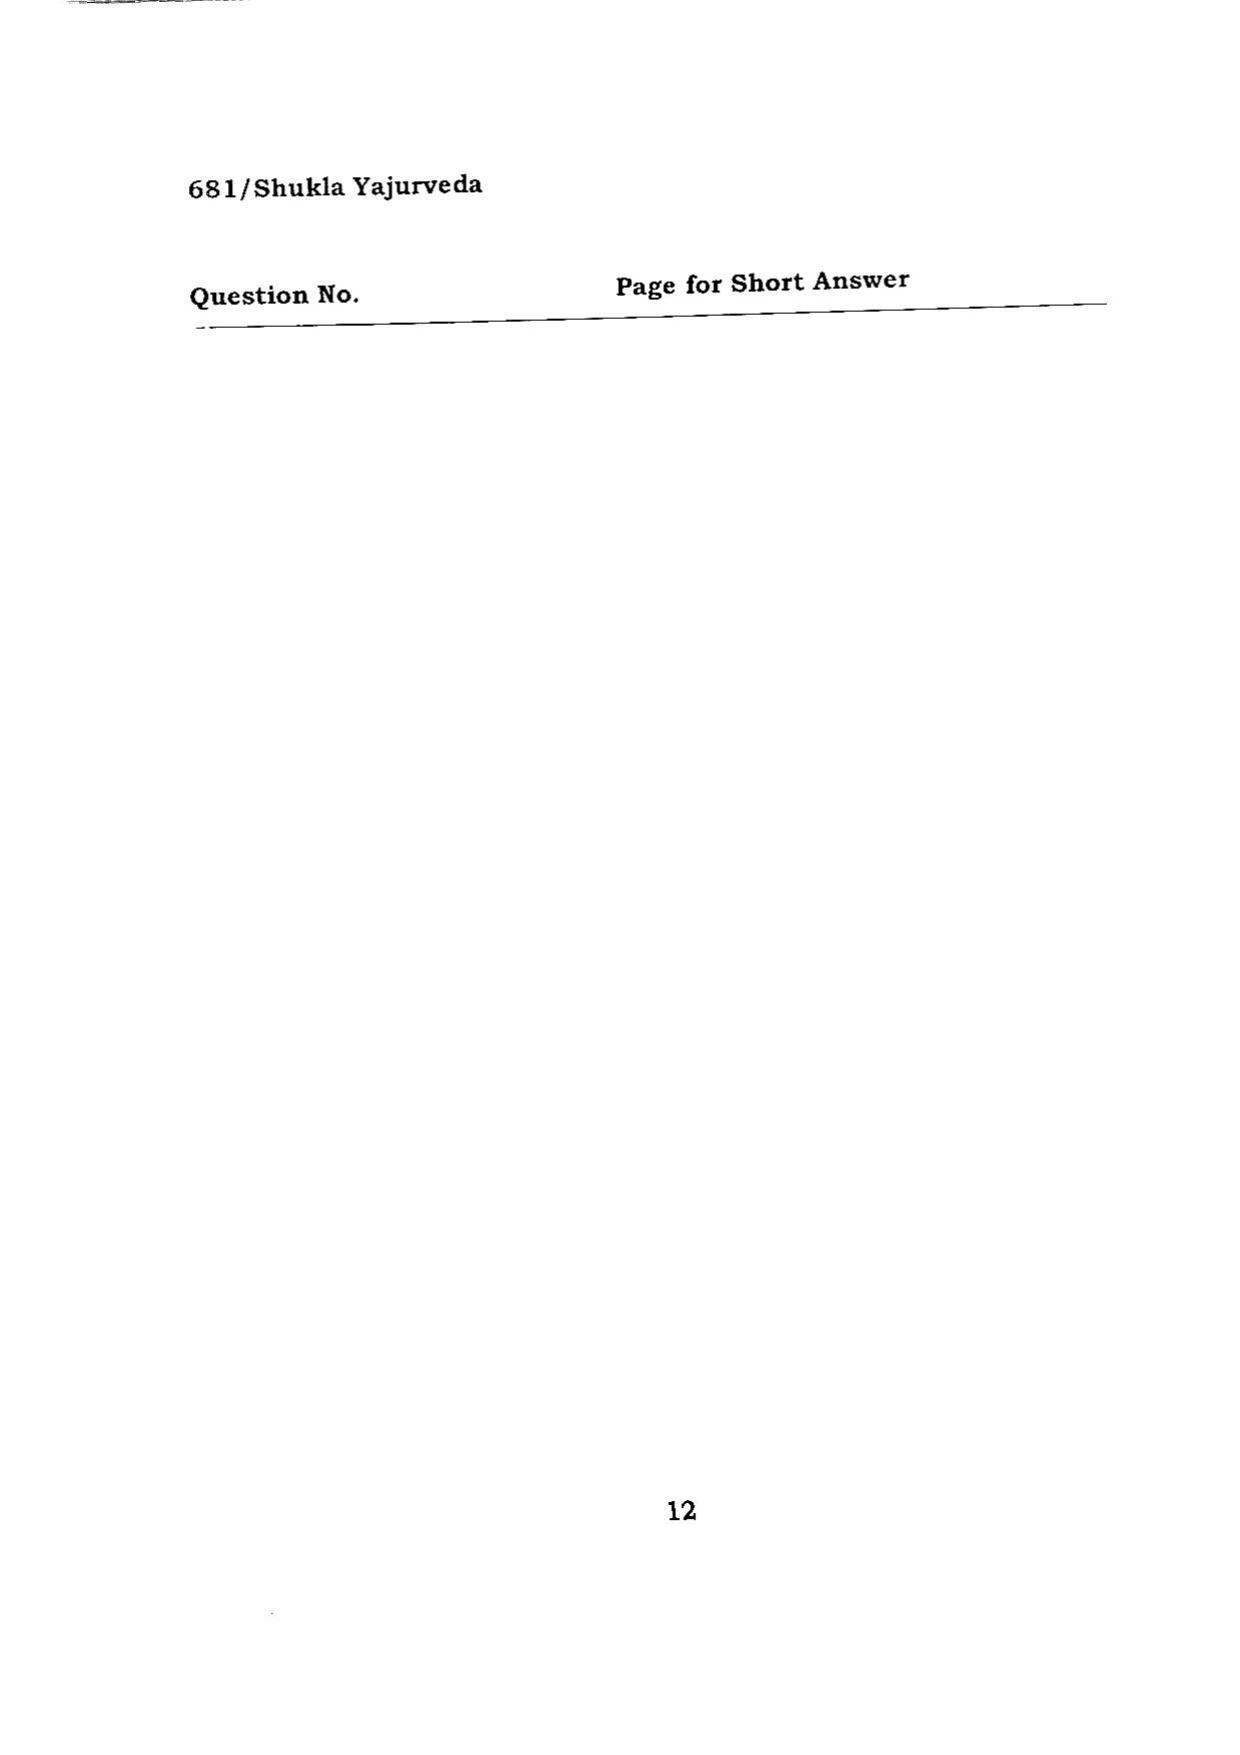 BHU RET SHUKLA YAJURVEDA 2015 Question Paper - Page 12